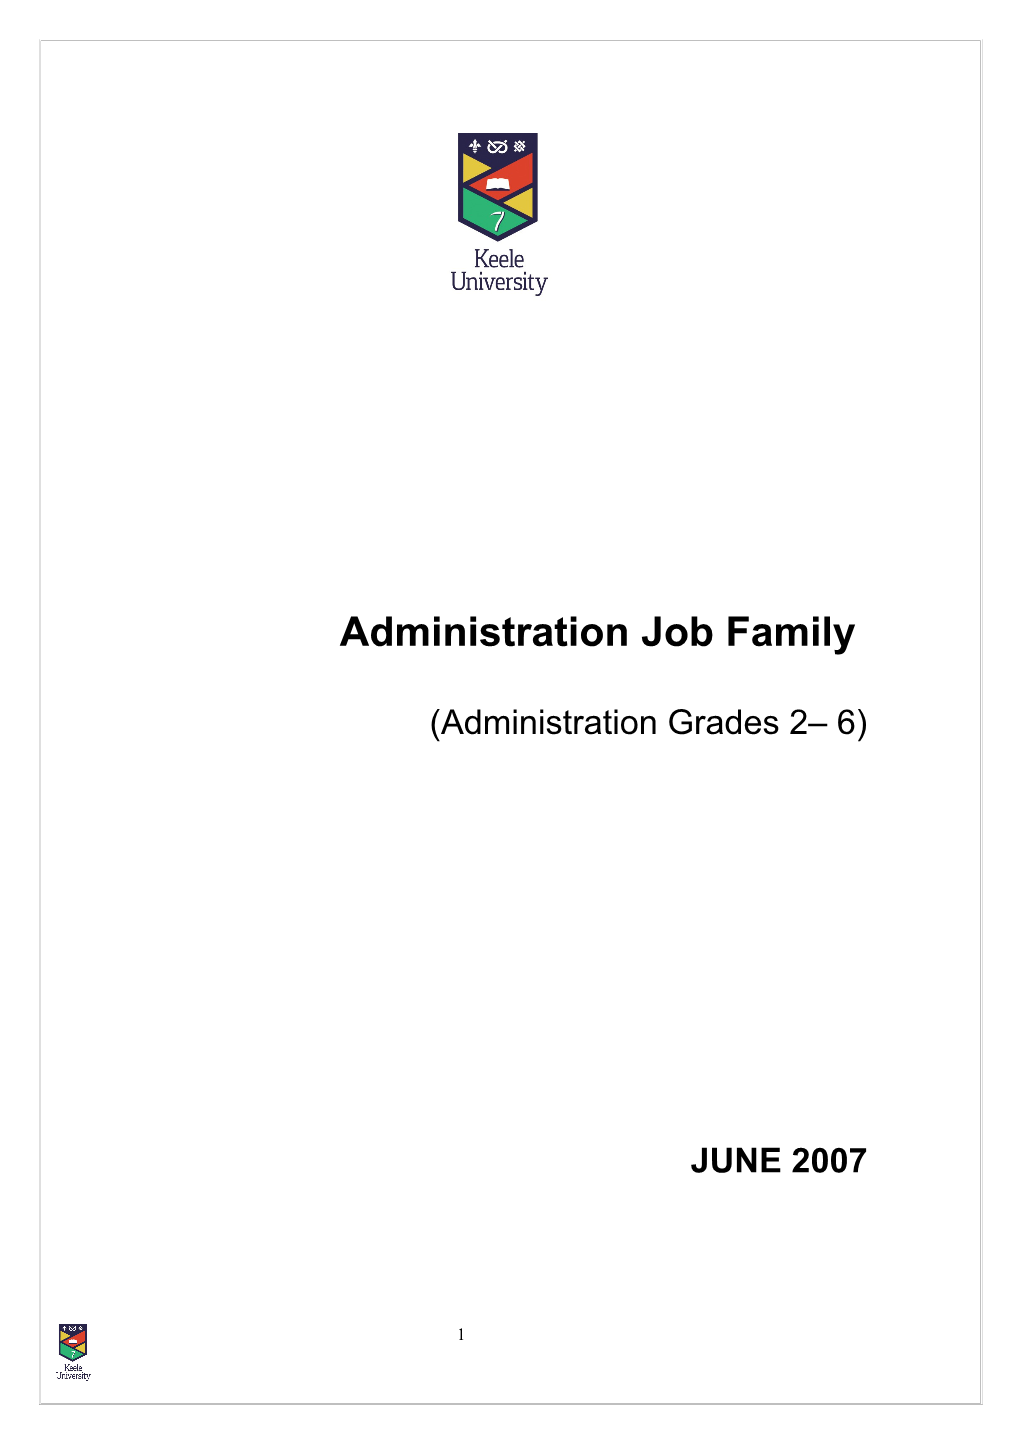 Higher Education Job Families Summary